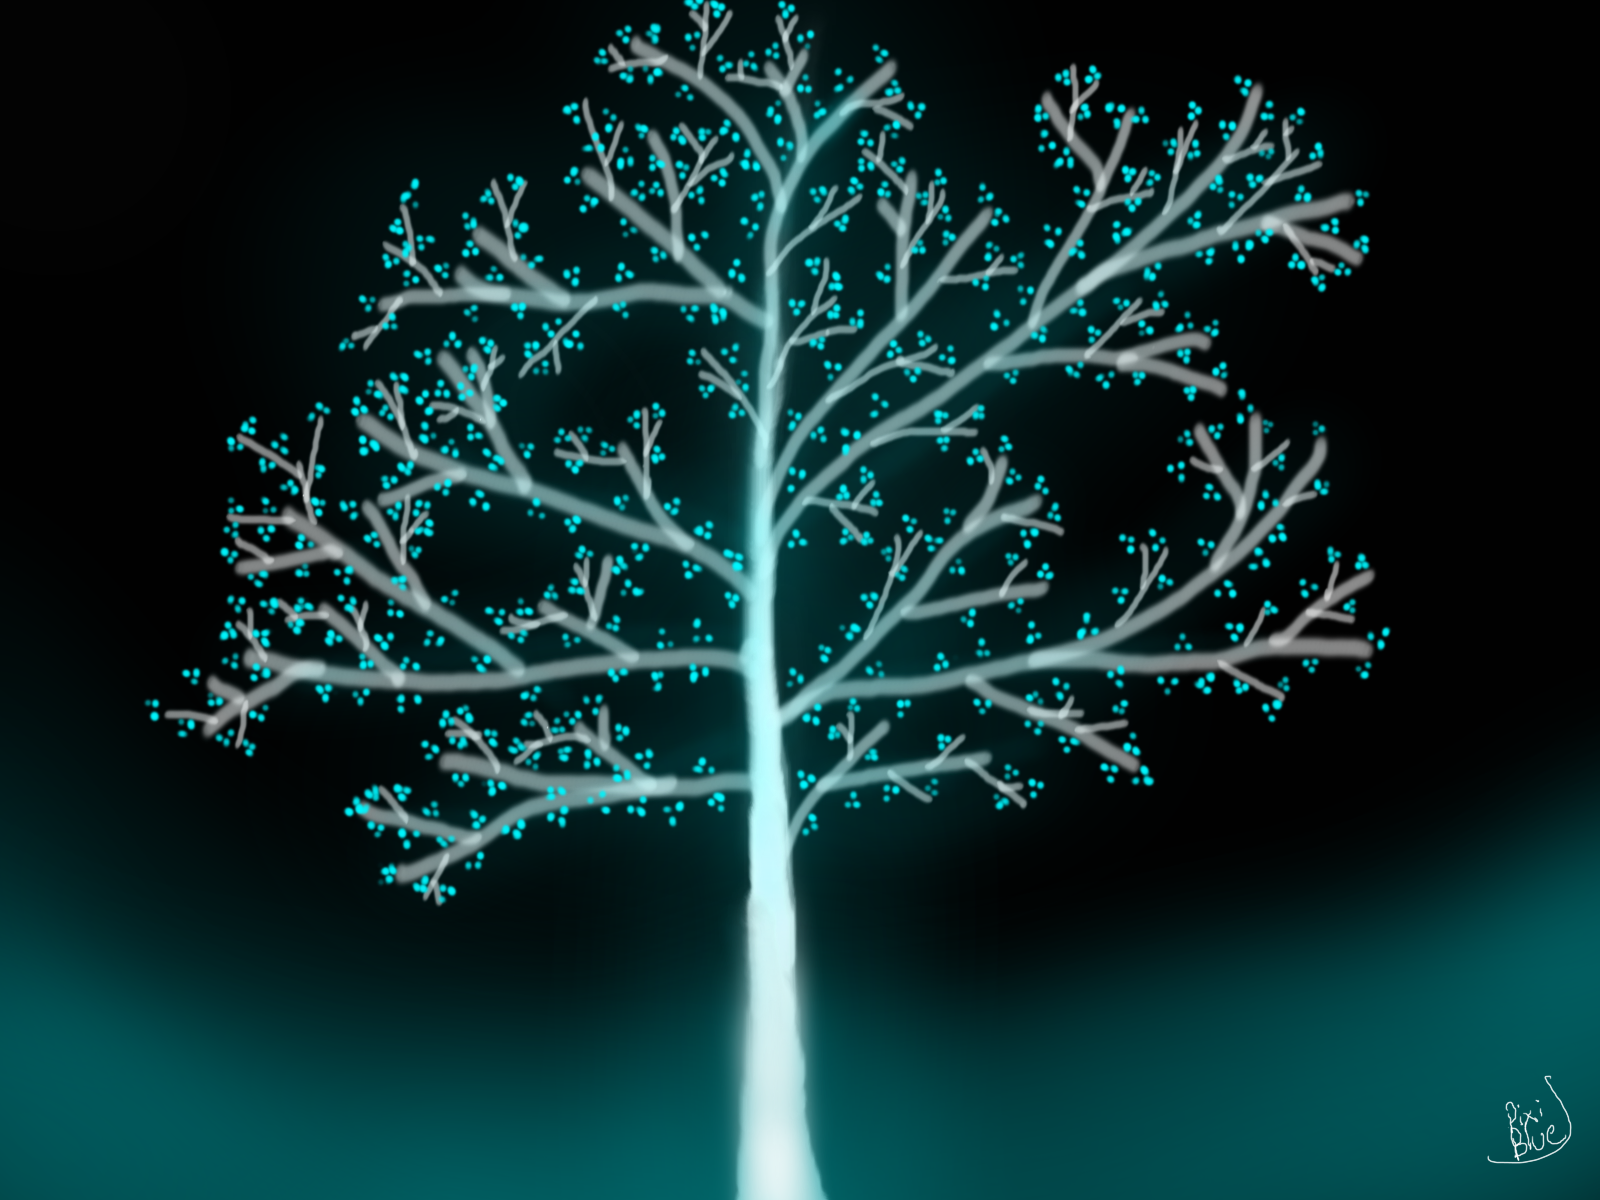 The Glowing Tree by PixiBlue on DeviantArt